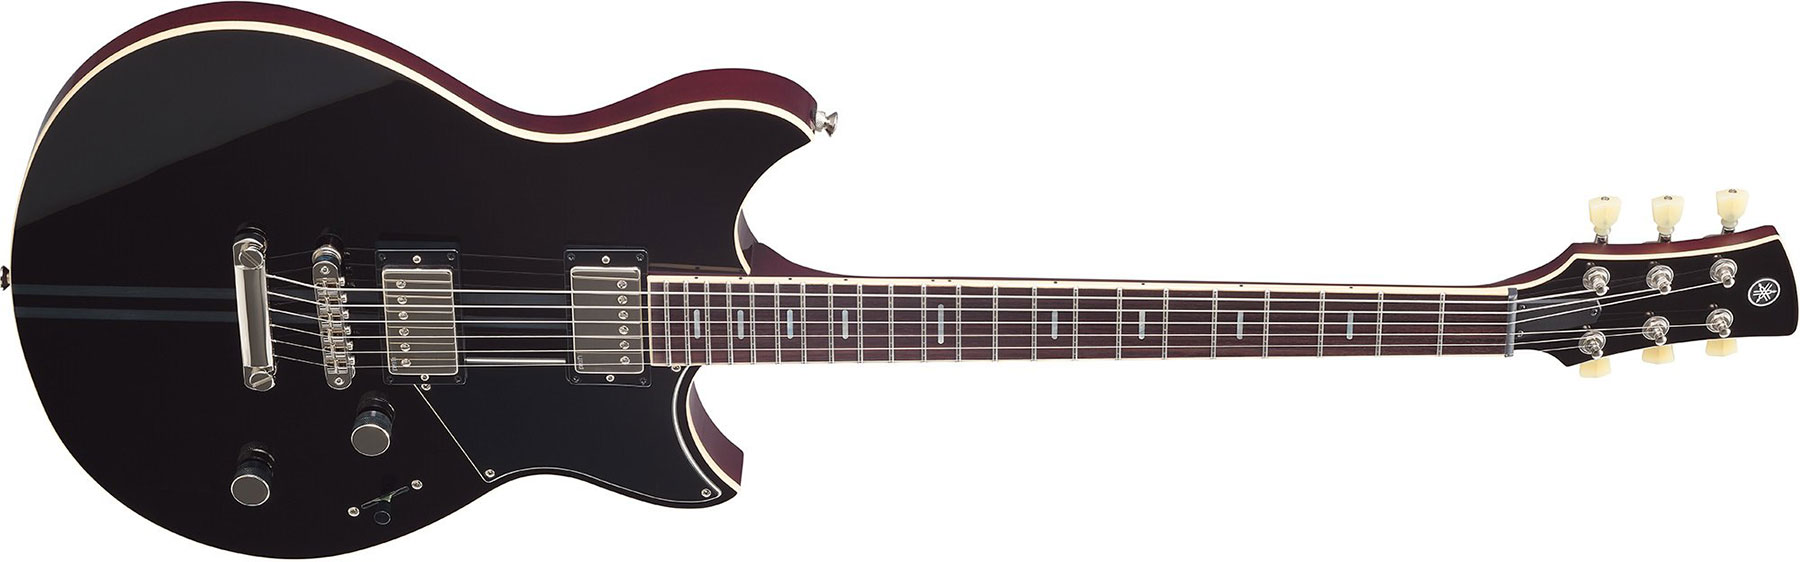 Yamaha Rss20 Revstar Standard Hh Ht Rw - Black - Guitarra eléctrica de doble corte. - Variation 1